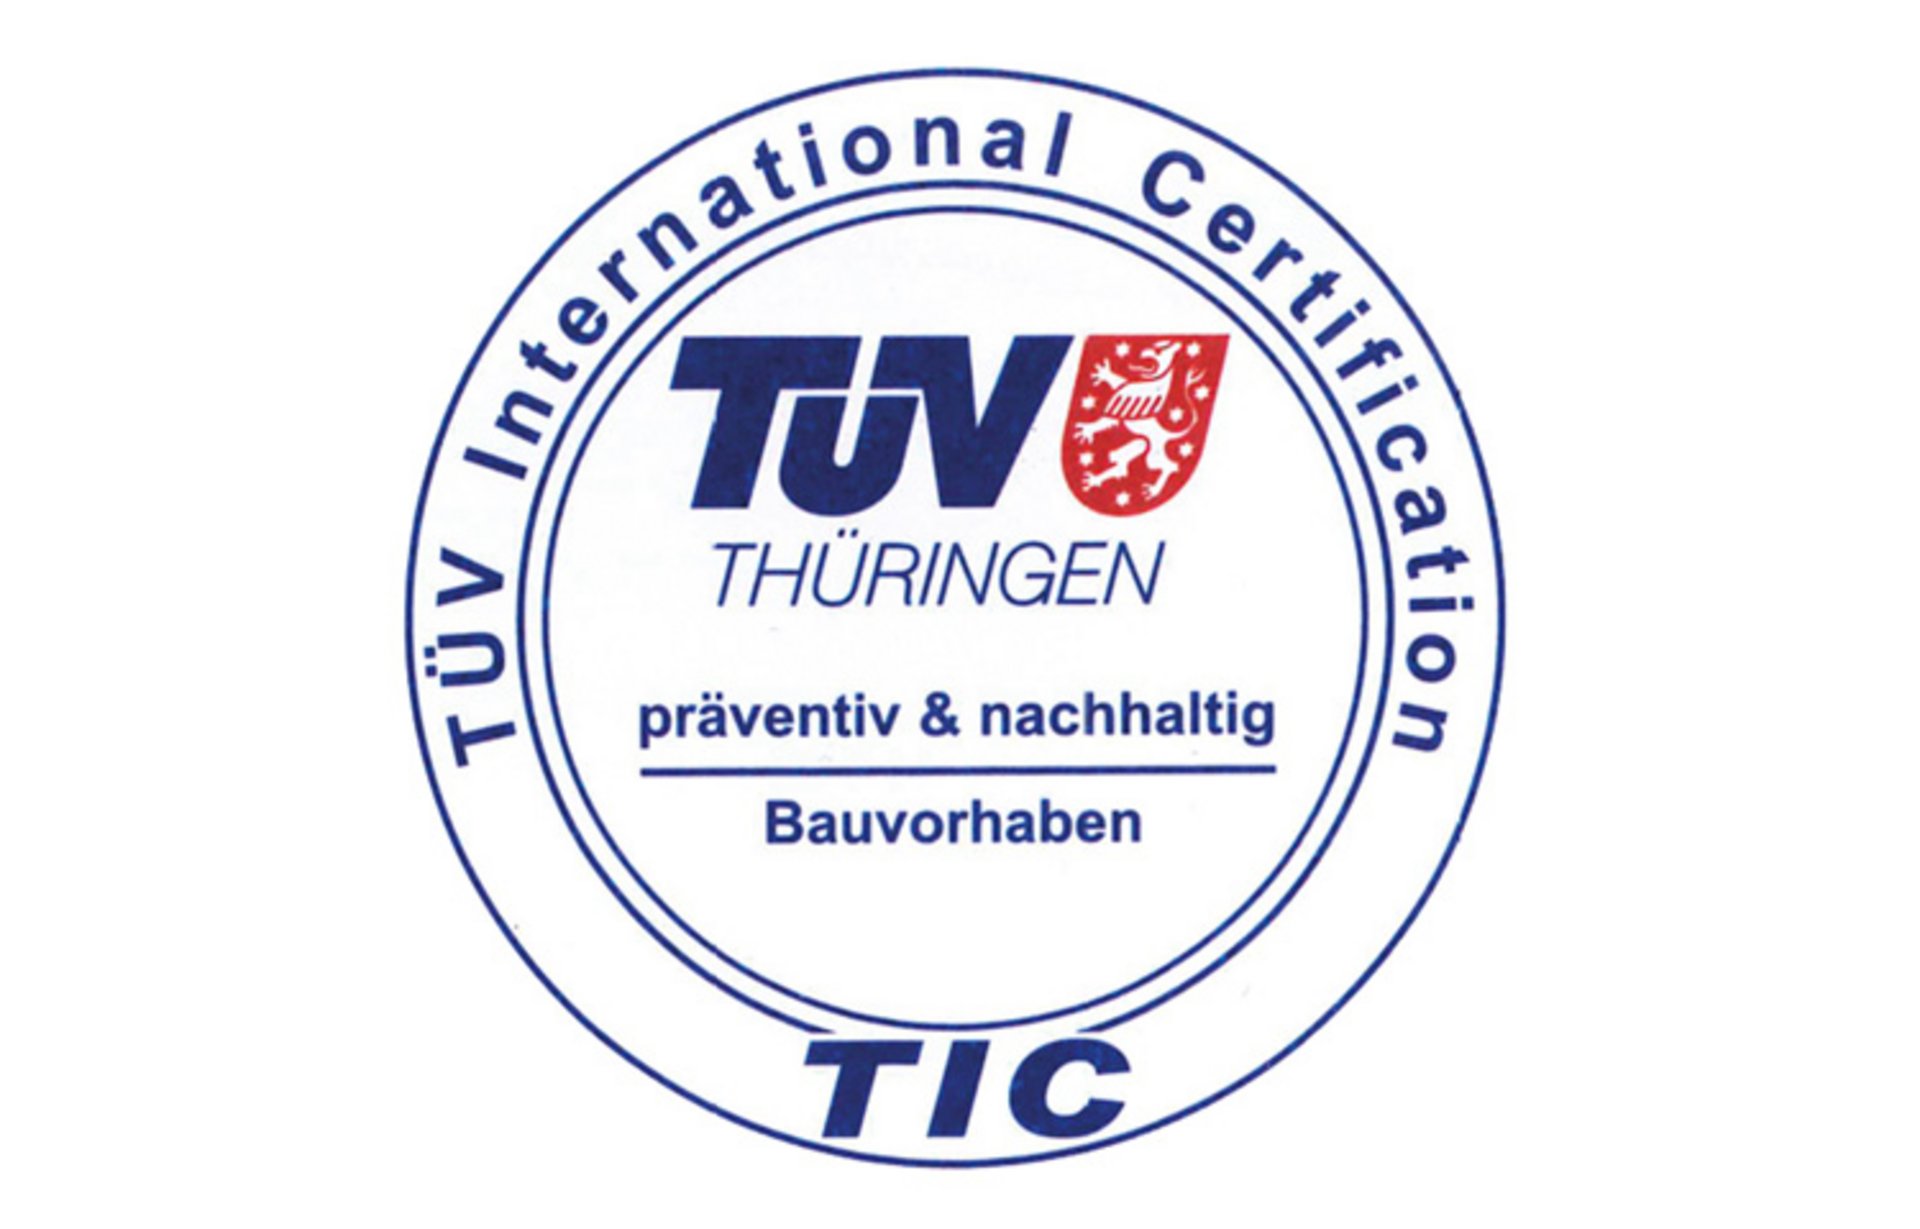 TÜV Thüringen "präventiv & nachhaltig Bauvorhaben"